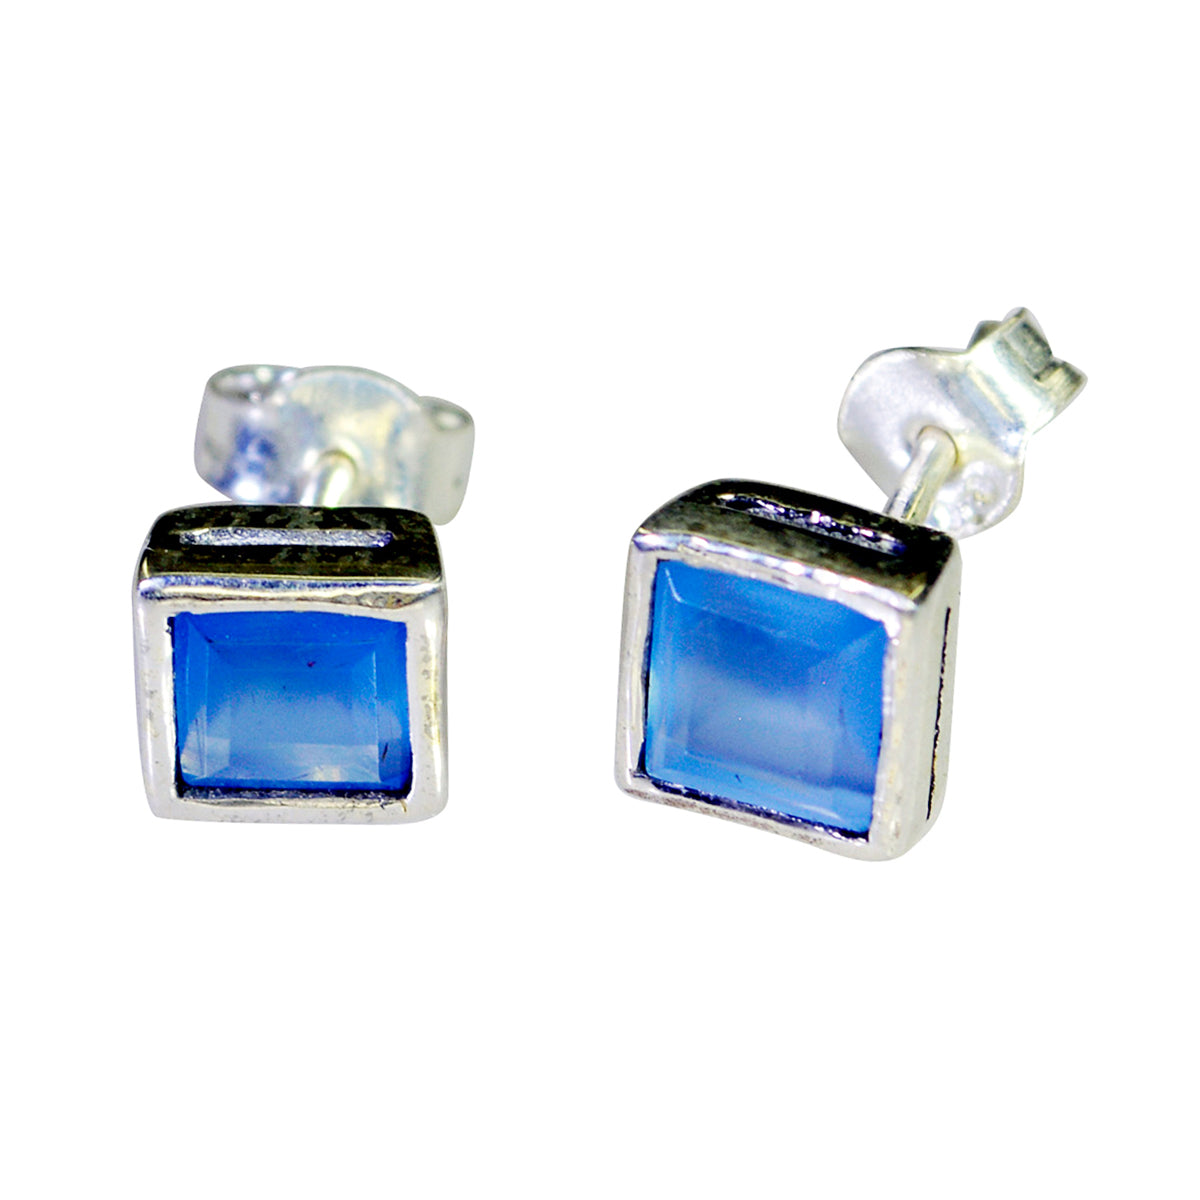 Riyo Engagierender 925er-Sterlingsilber-Ohrring für Damen, blauer Chalcedon-Ohrring, Lünettenfassung, blauer Ohrring-Bolzen-Ohrring